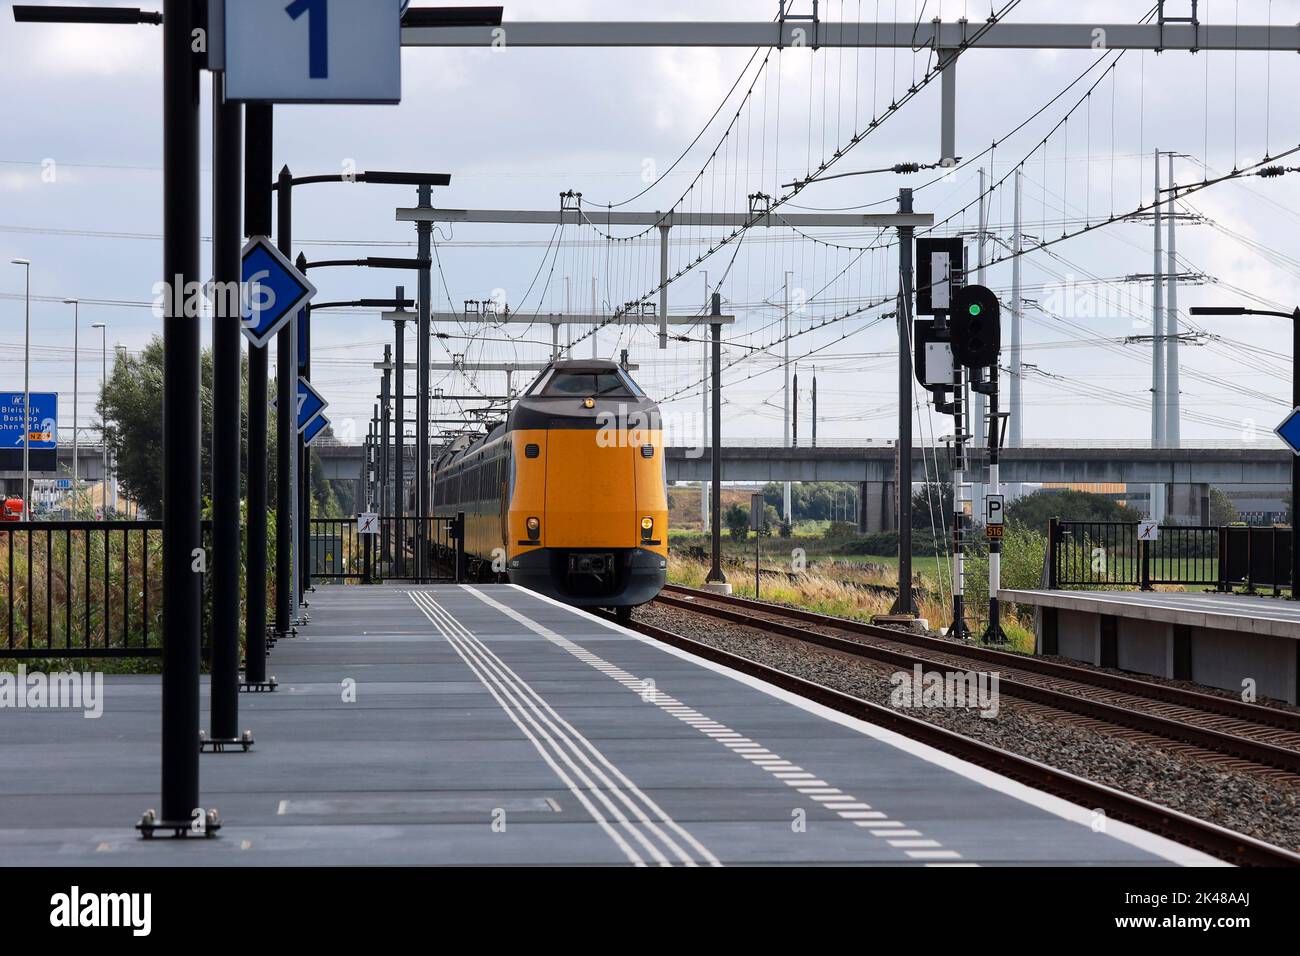 ICM Intercity train called Koploper rushes along platform at station Lansingerland Zoetermeer in the Netherlands Stock Photo